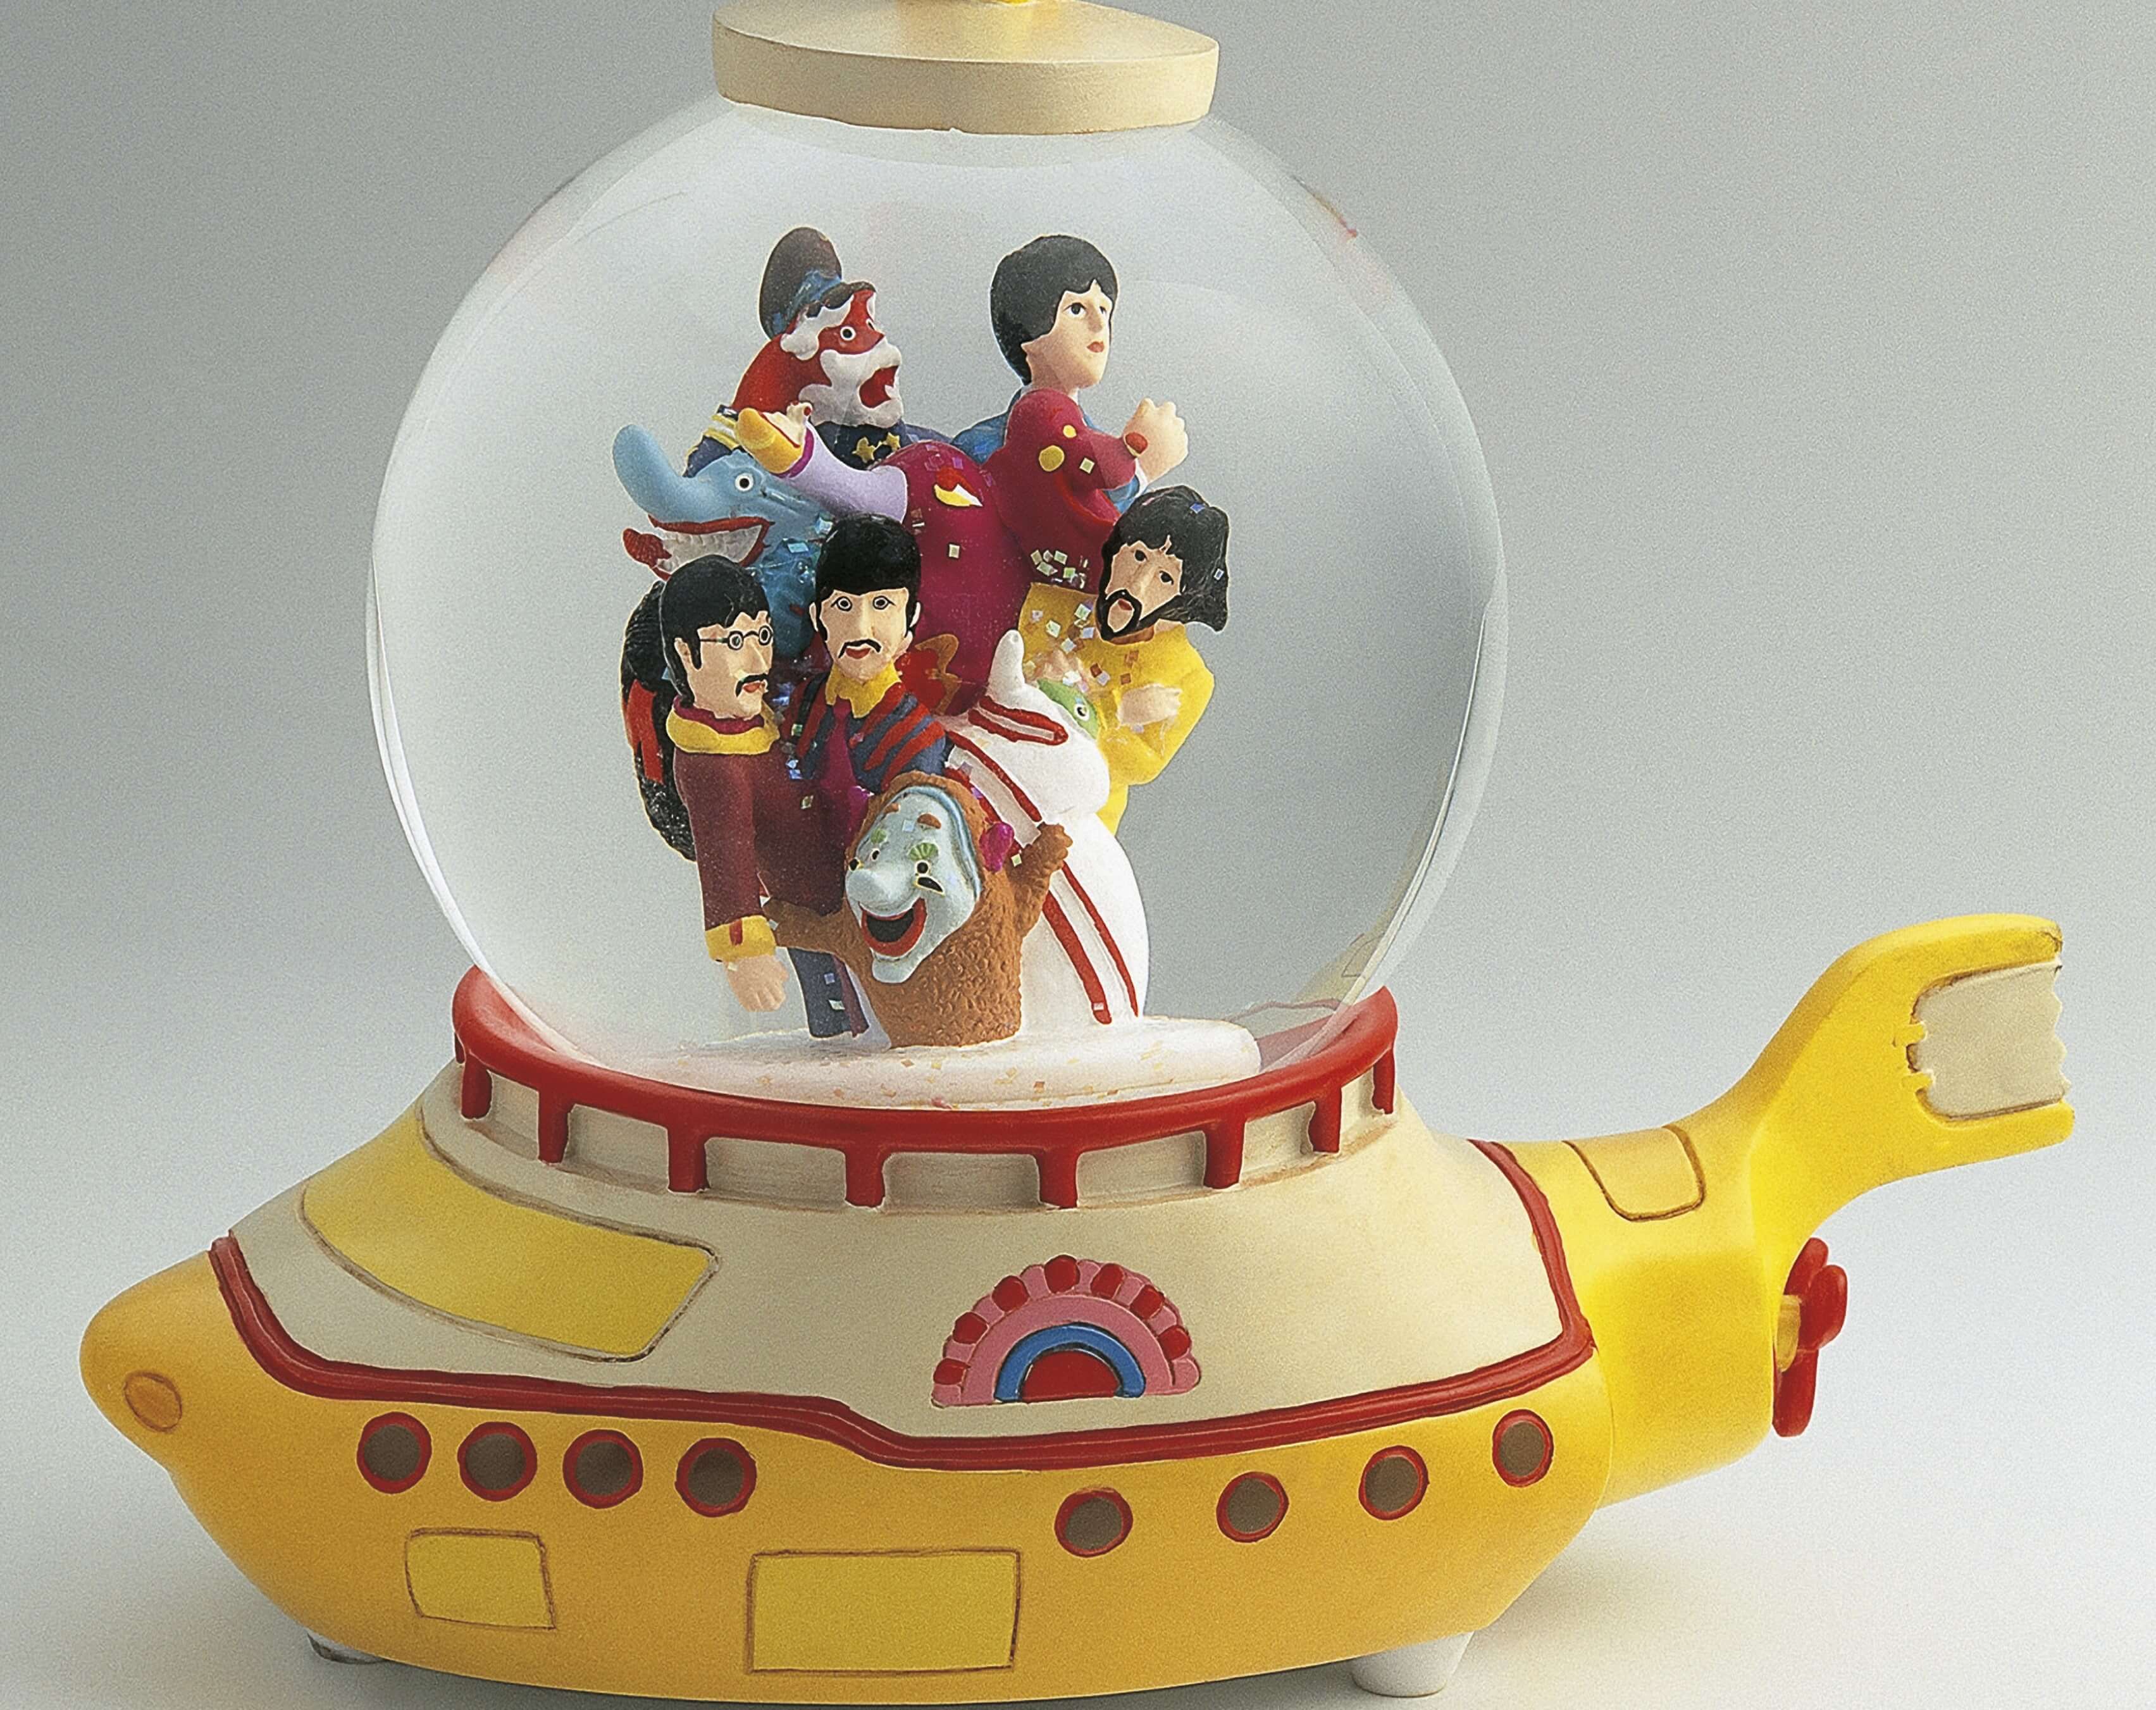 A snow globe advertising The Beatles' 'Yellow Submarine'